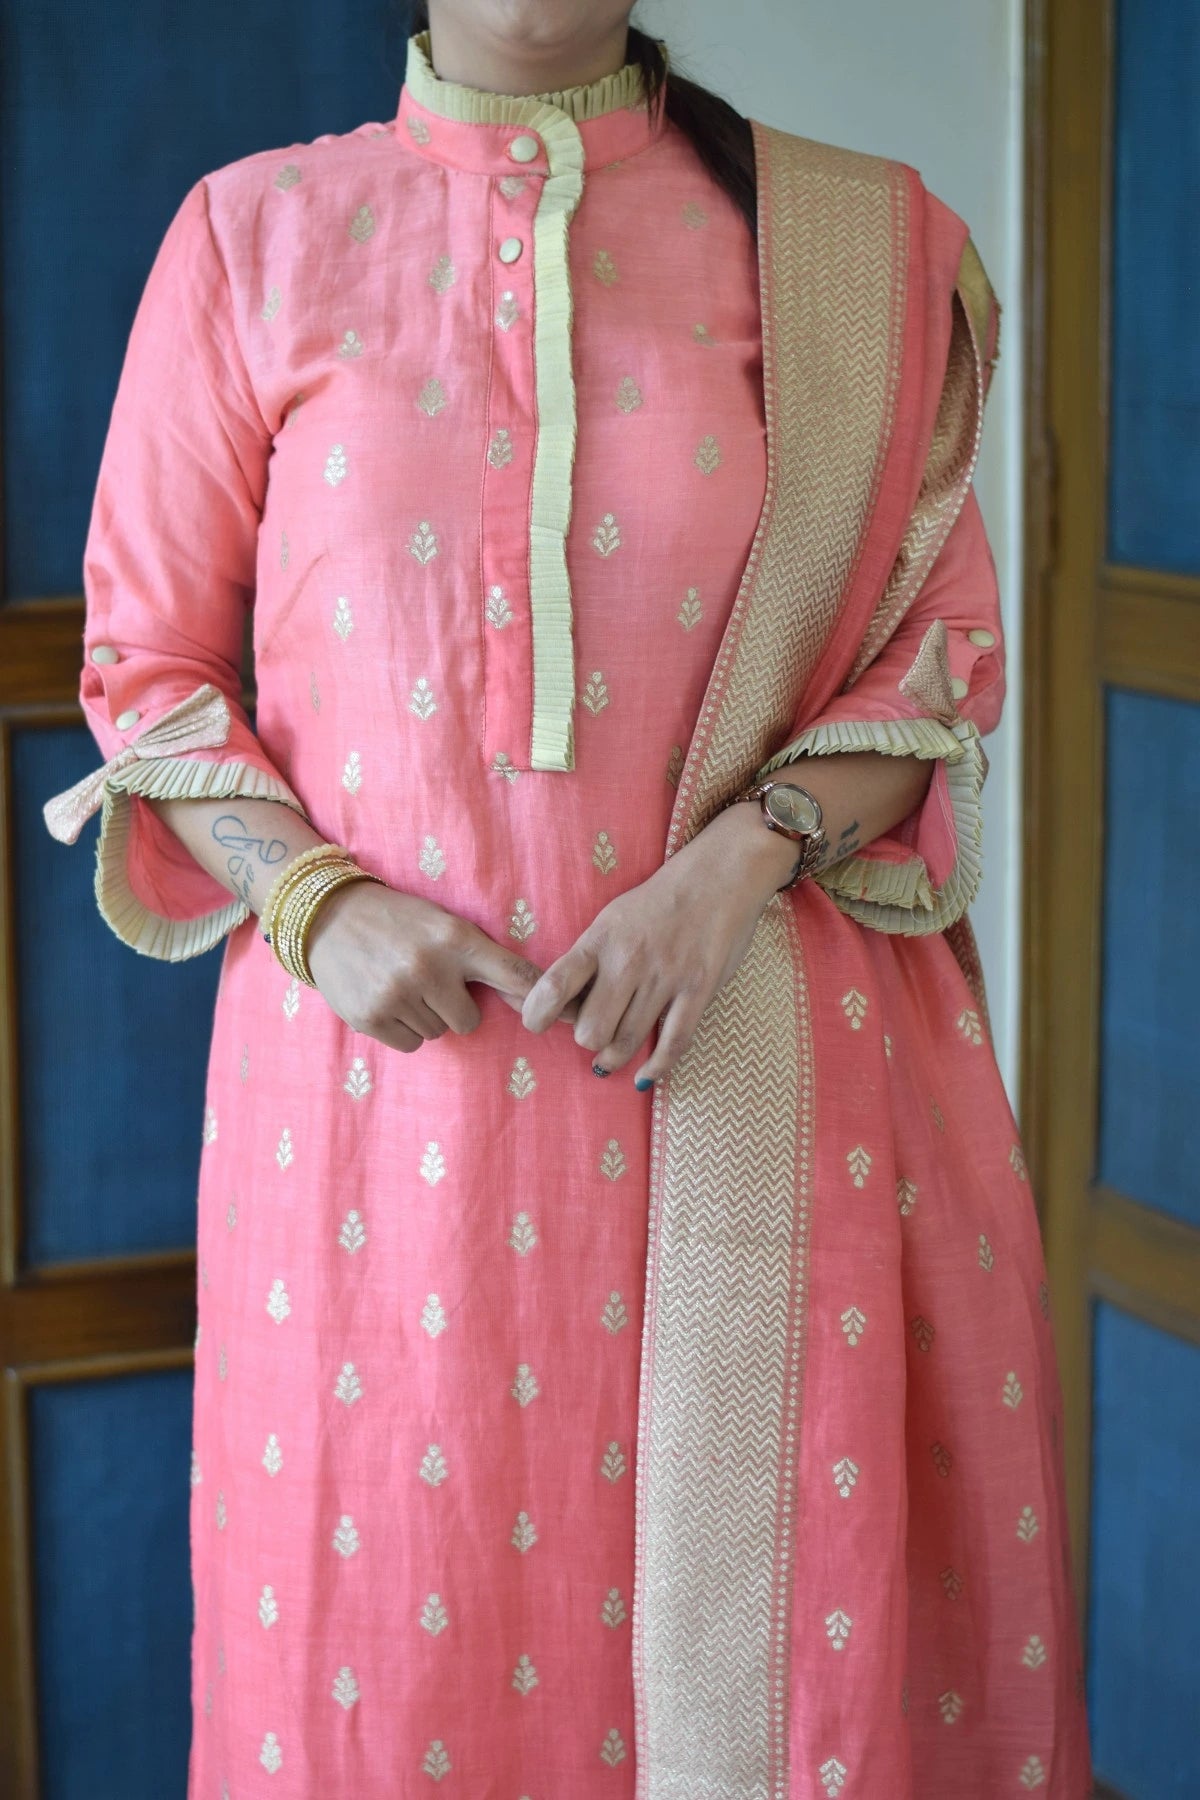 An Indian woman wearing a peach linen kurta with long sleeves.